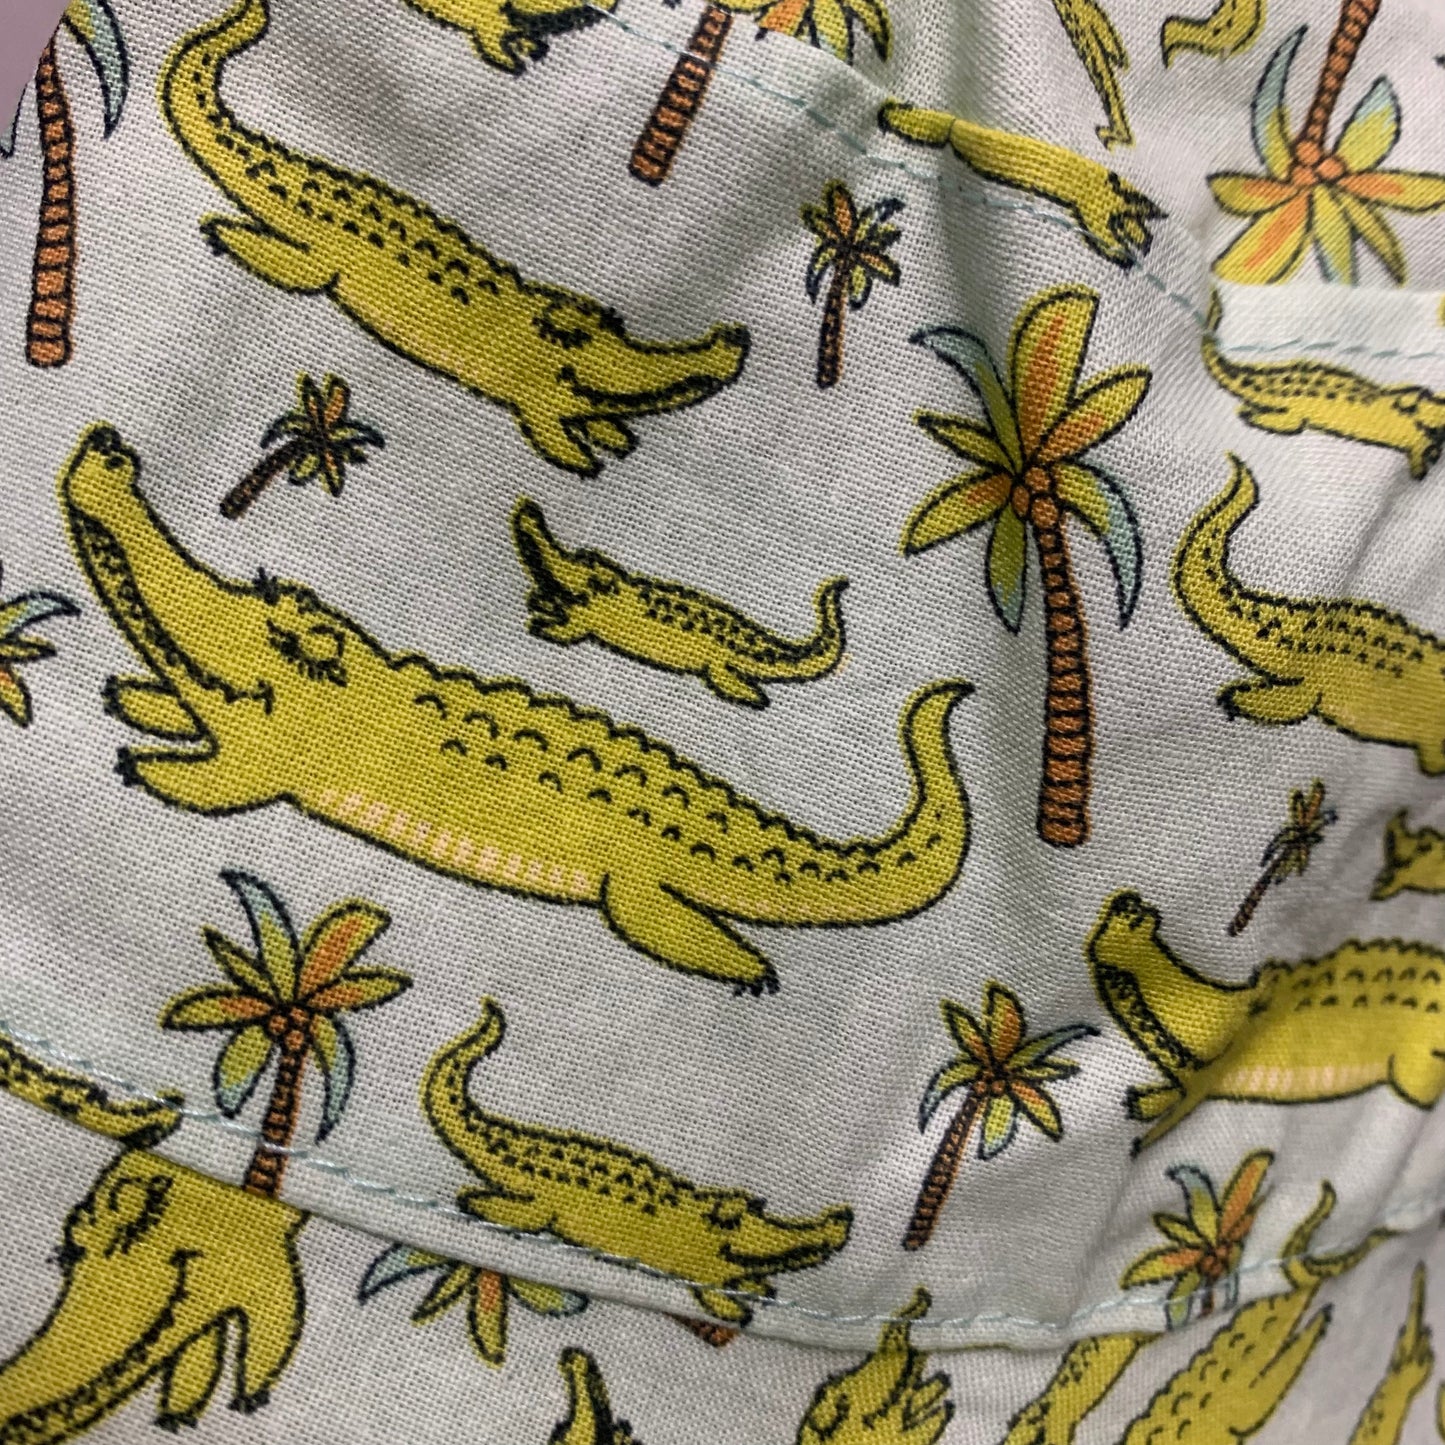 Teacups n Quilts- Crocodiles Fabric Hat- Kids Size Medium